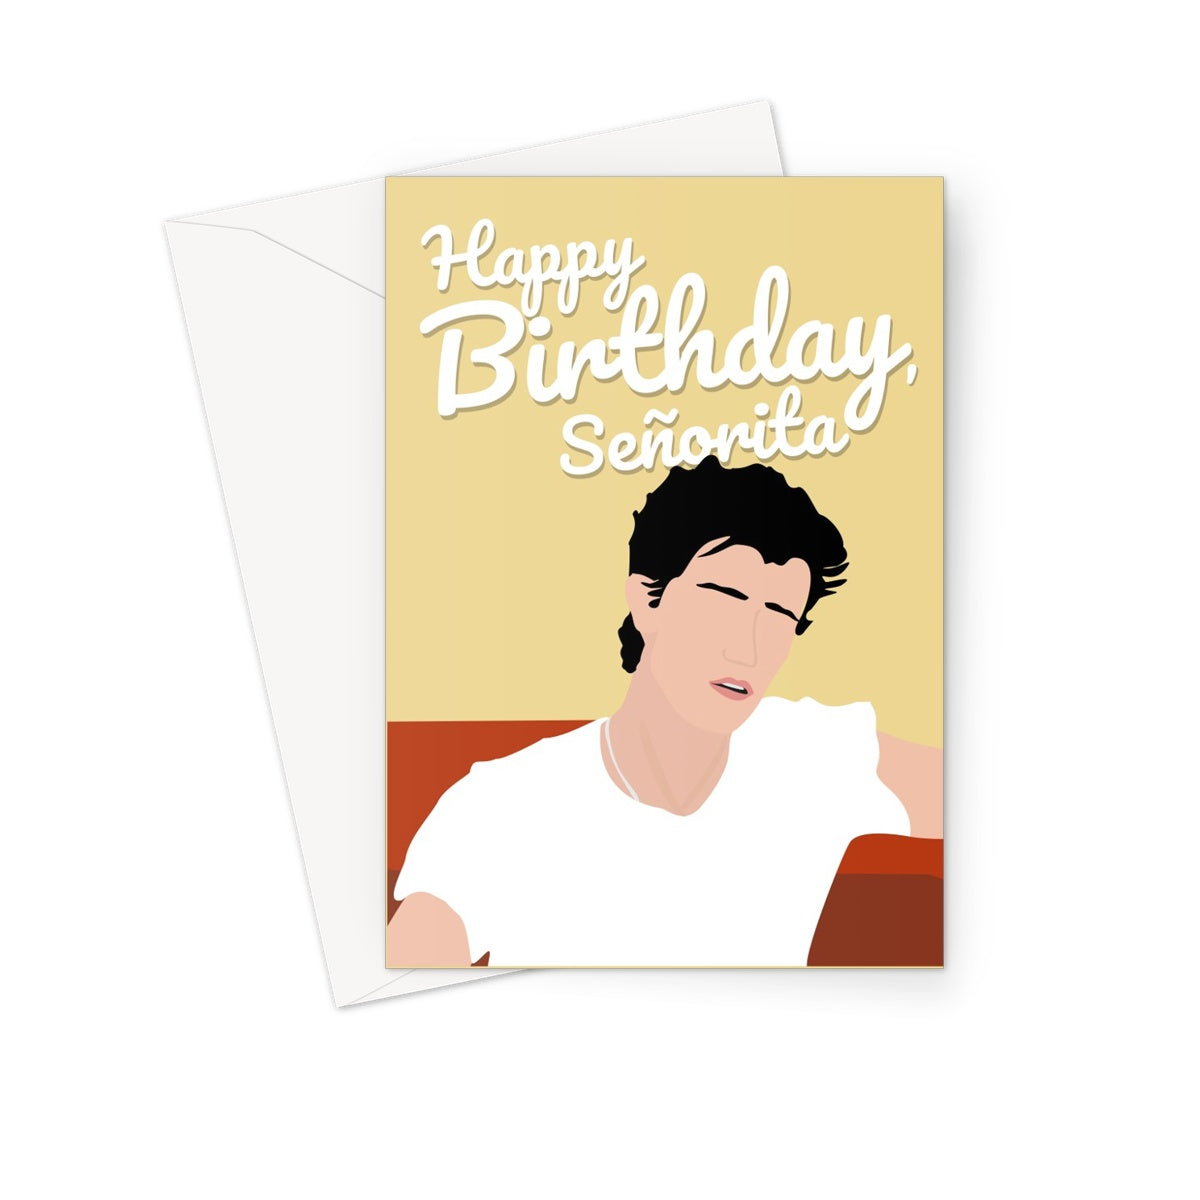 Shawn Mendes Happy Birthday Senorita  Greeting Card